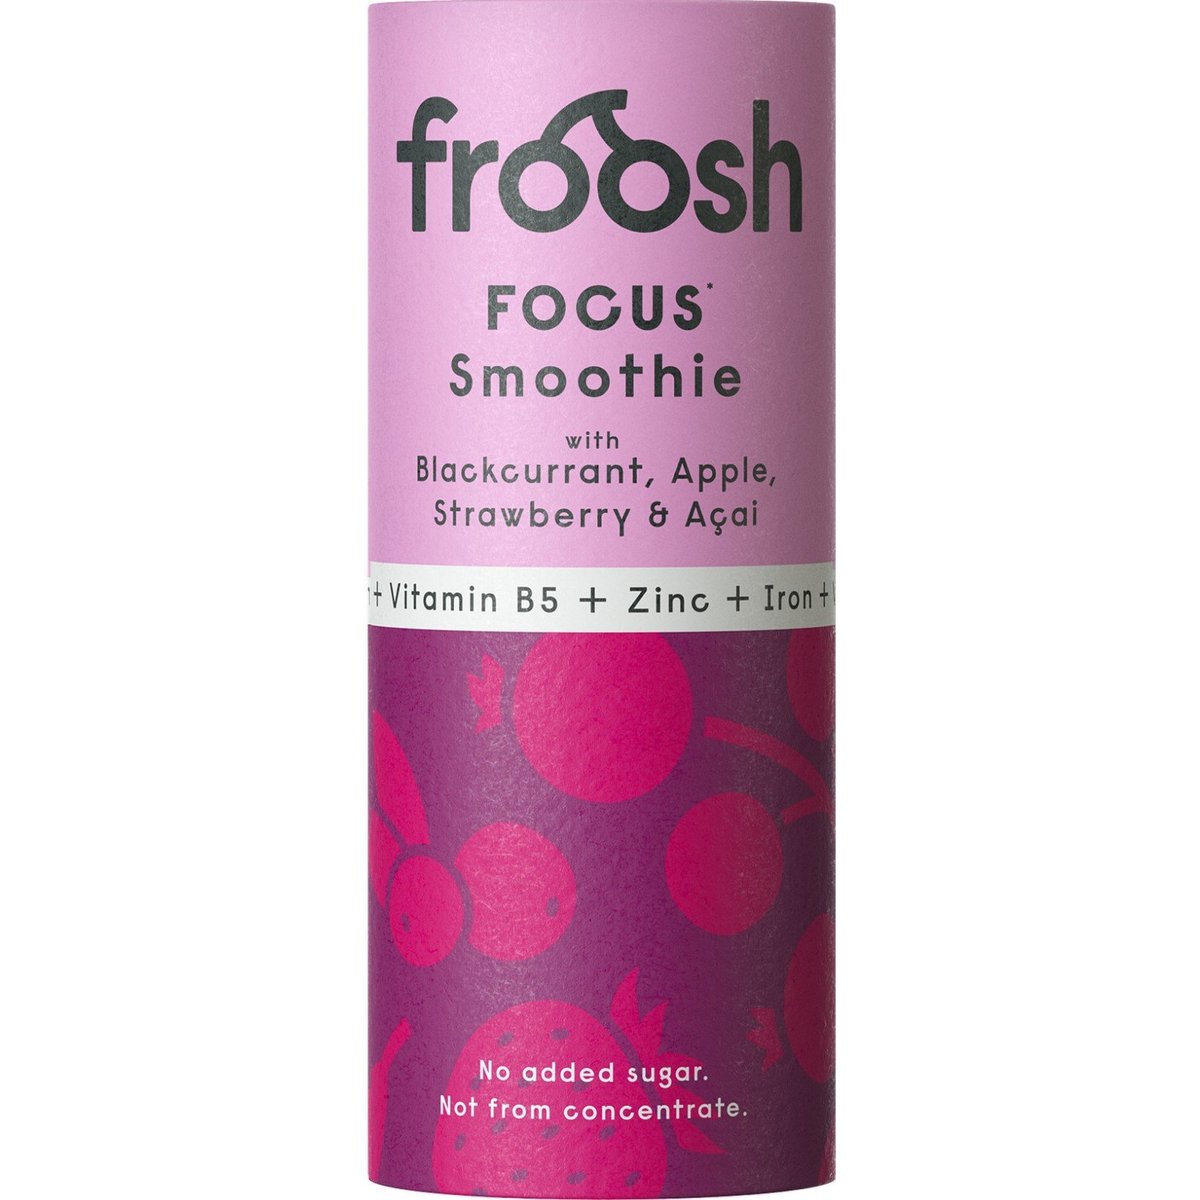 Froosh Focus smoothie